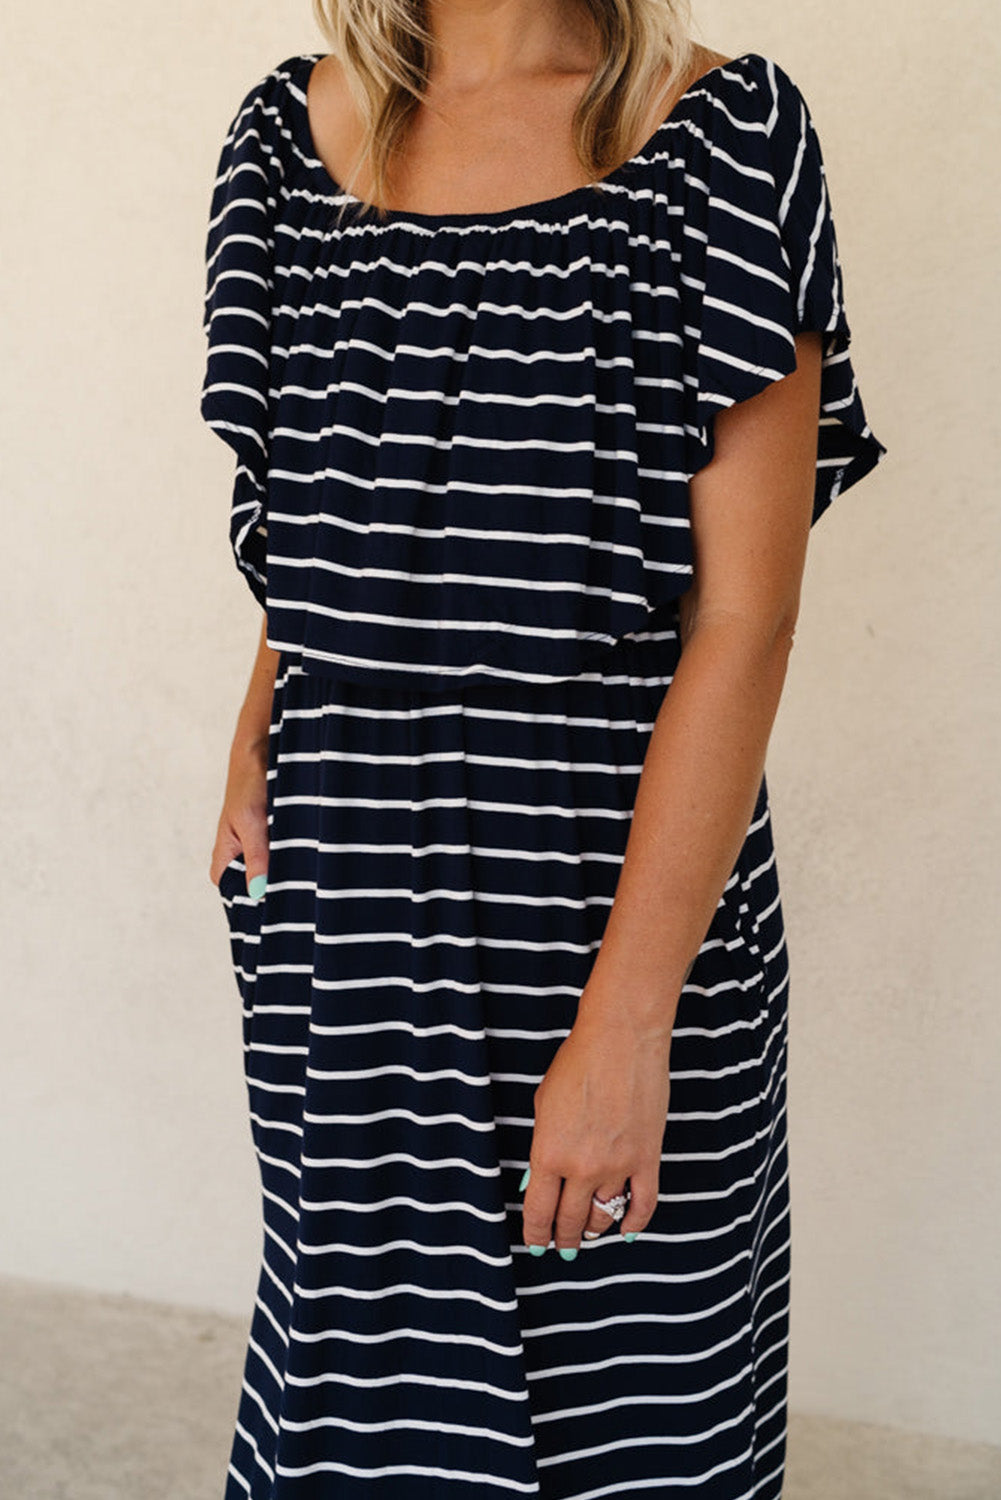 Blue Striped Print Ruffled High Waist Maxi Dress with Side Splits